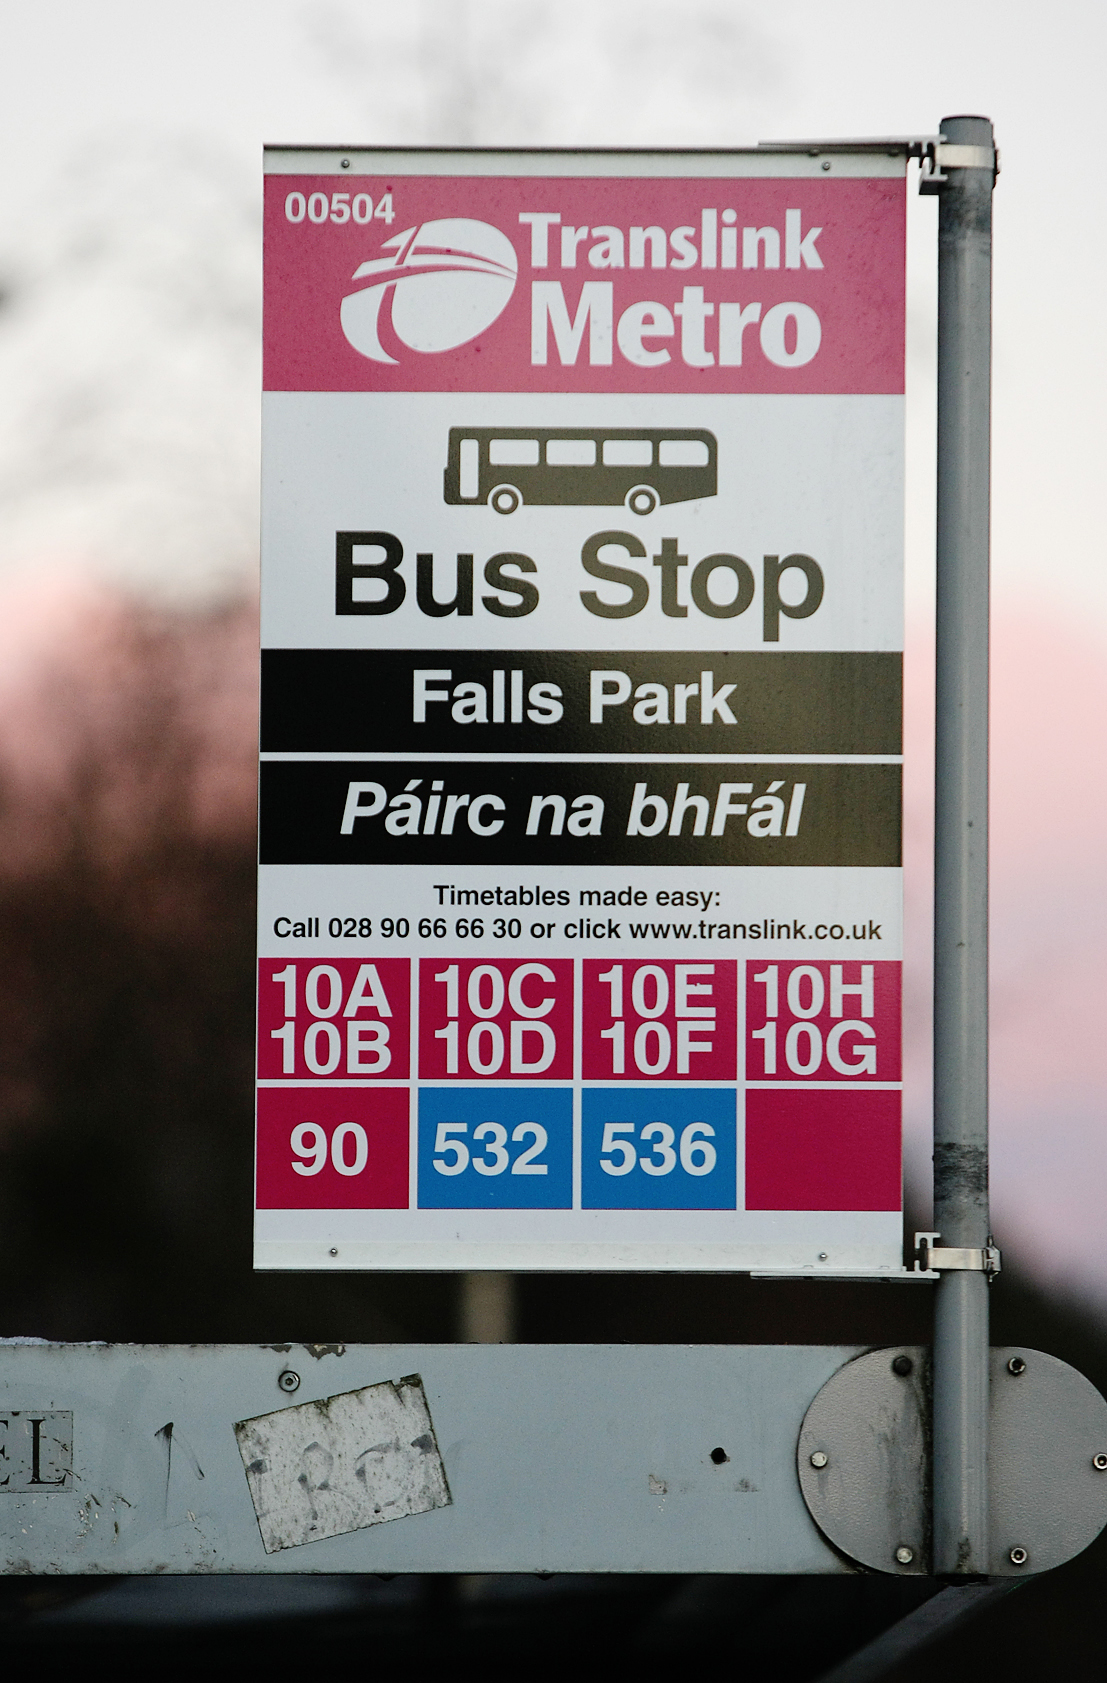 Bilingual signage put up by Translink. 1812mj10